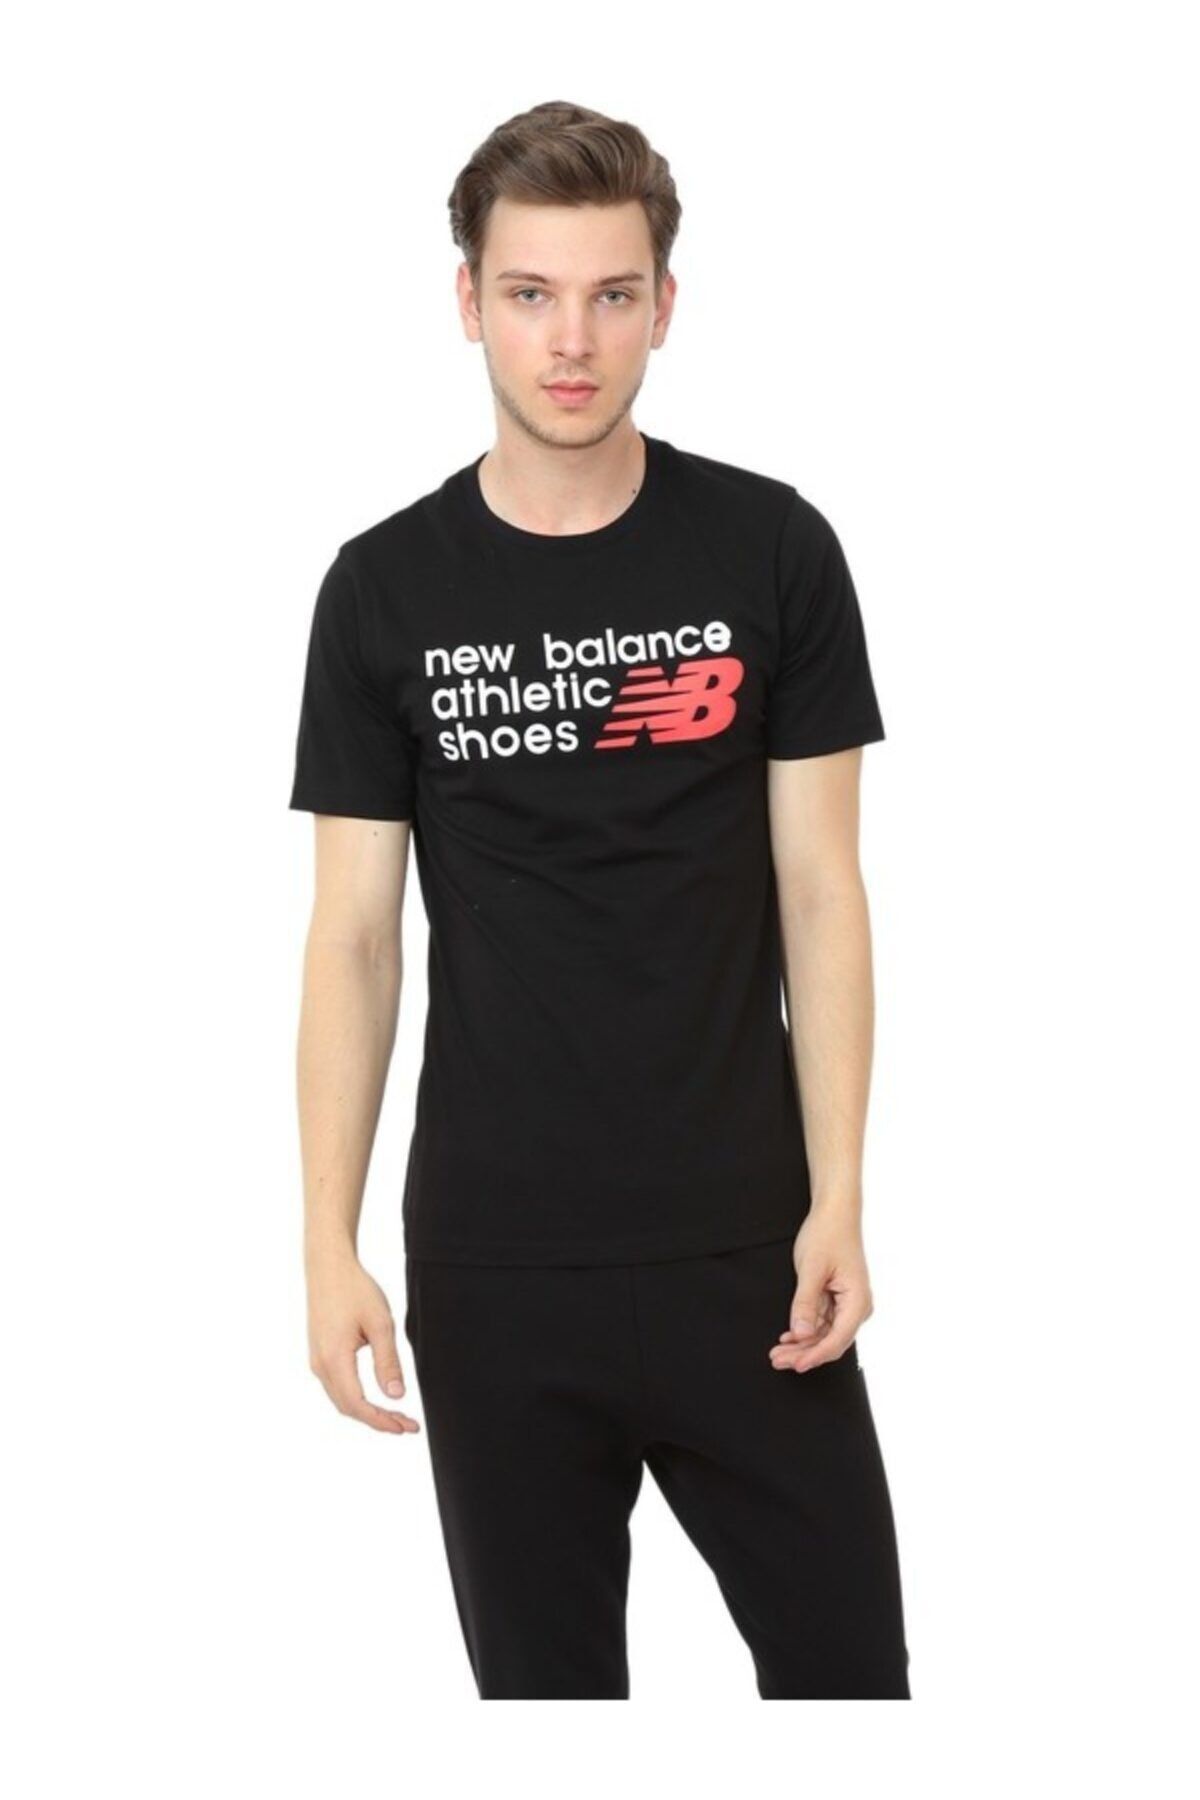 New Balance Mps001-tpg Nb Athletics Shoes Mens Tee Erkek T-shirt